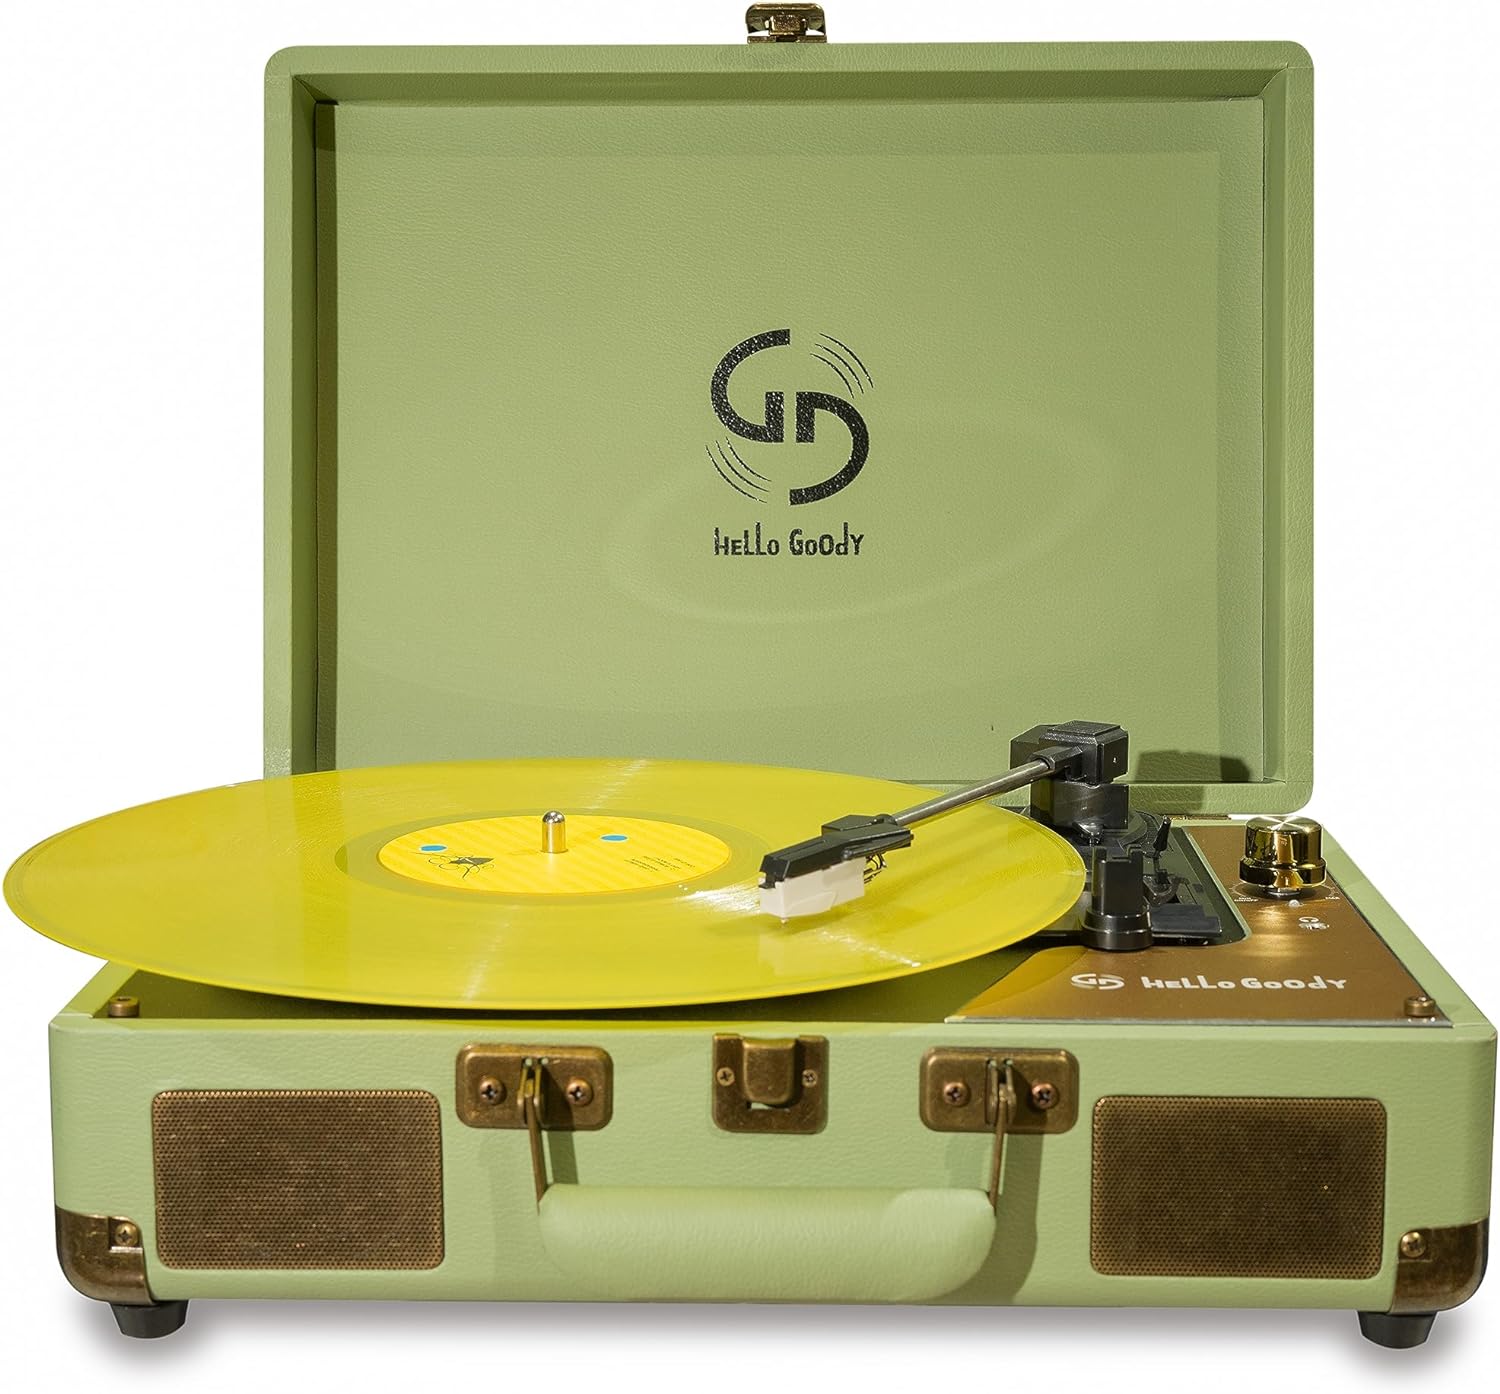 HelloGoody Vinyl Record Player Portable Record Player Turntable